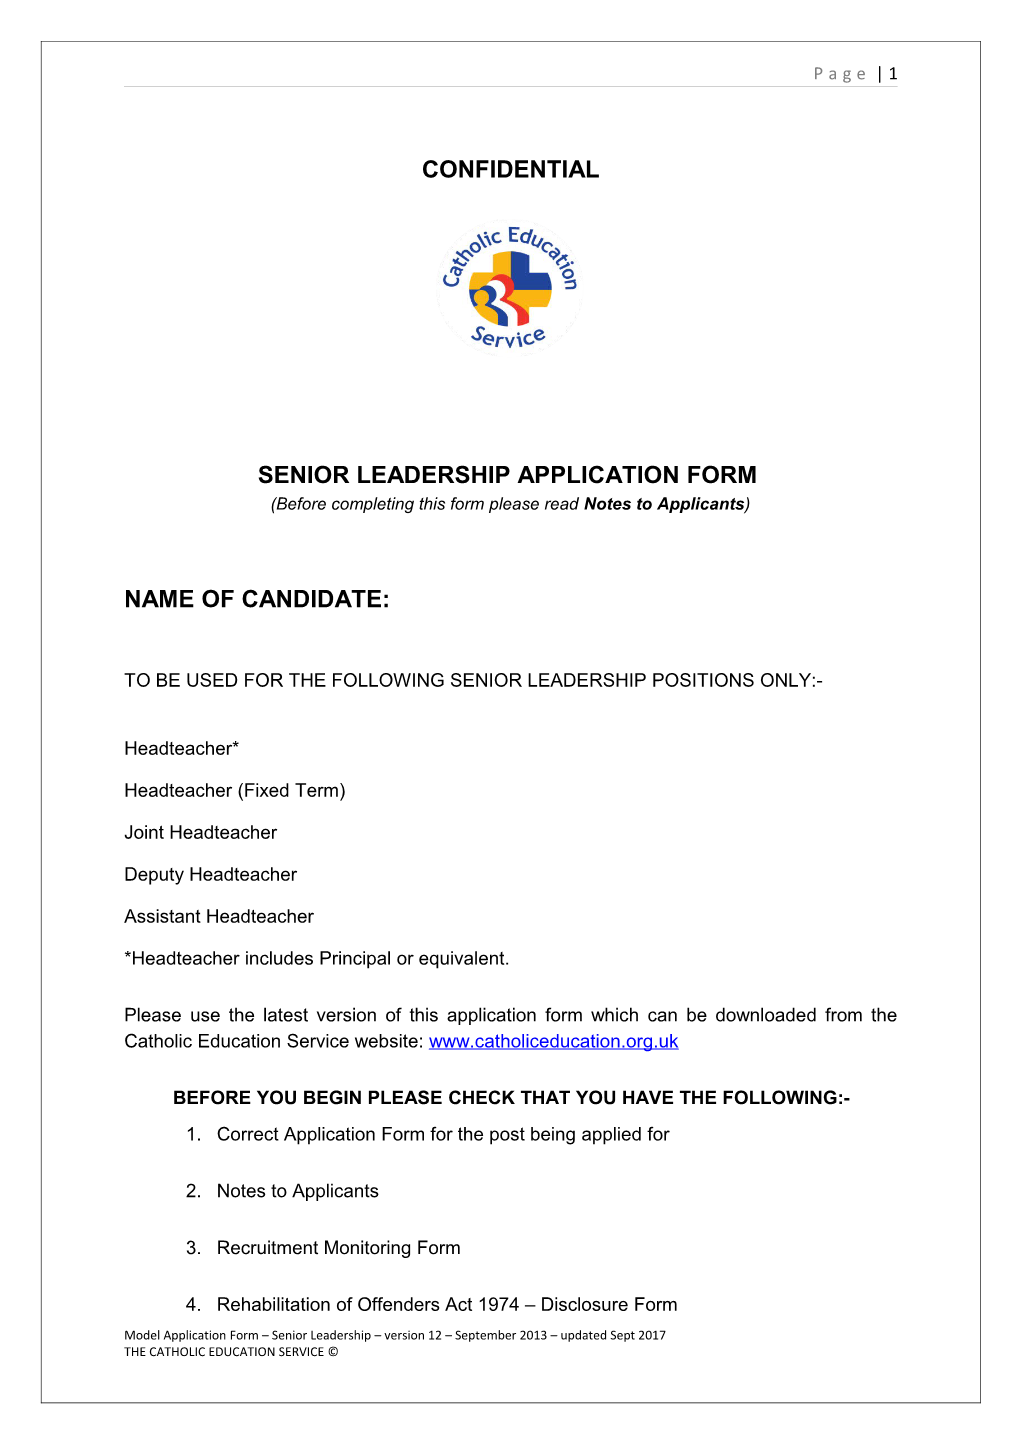 Senior Leadership Application Form